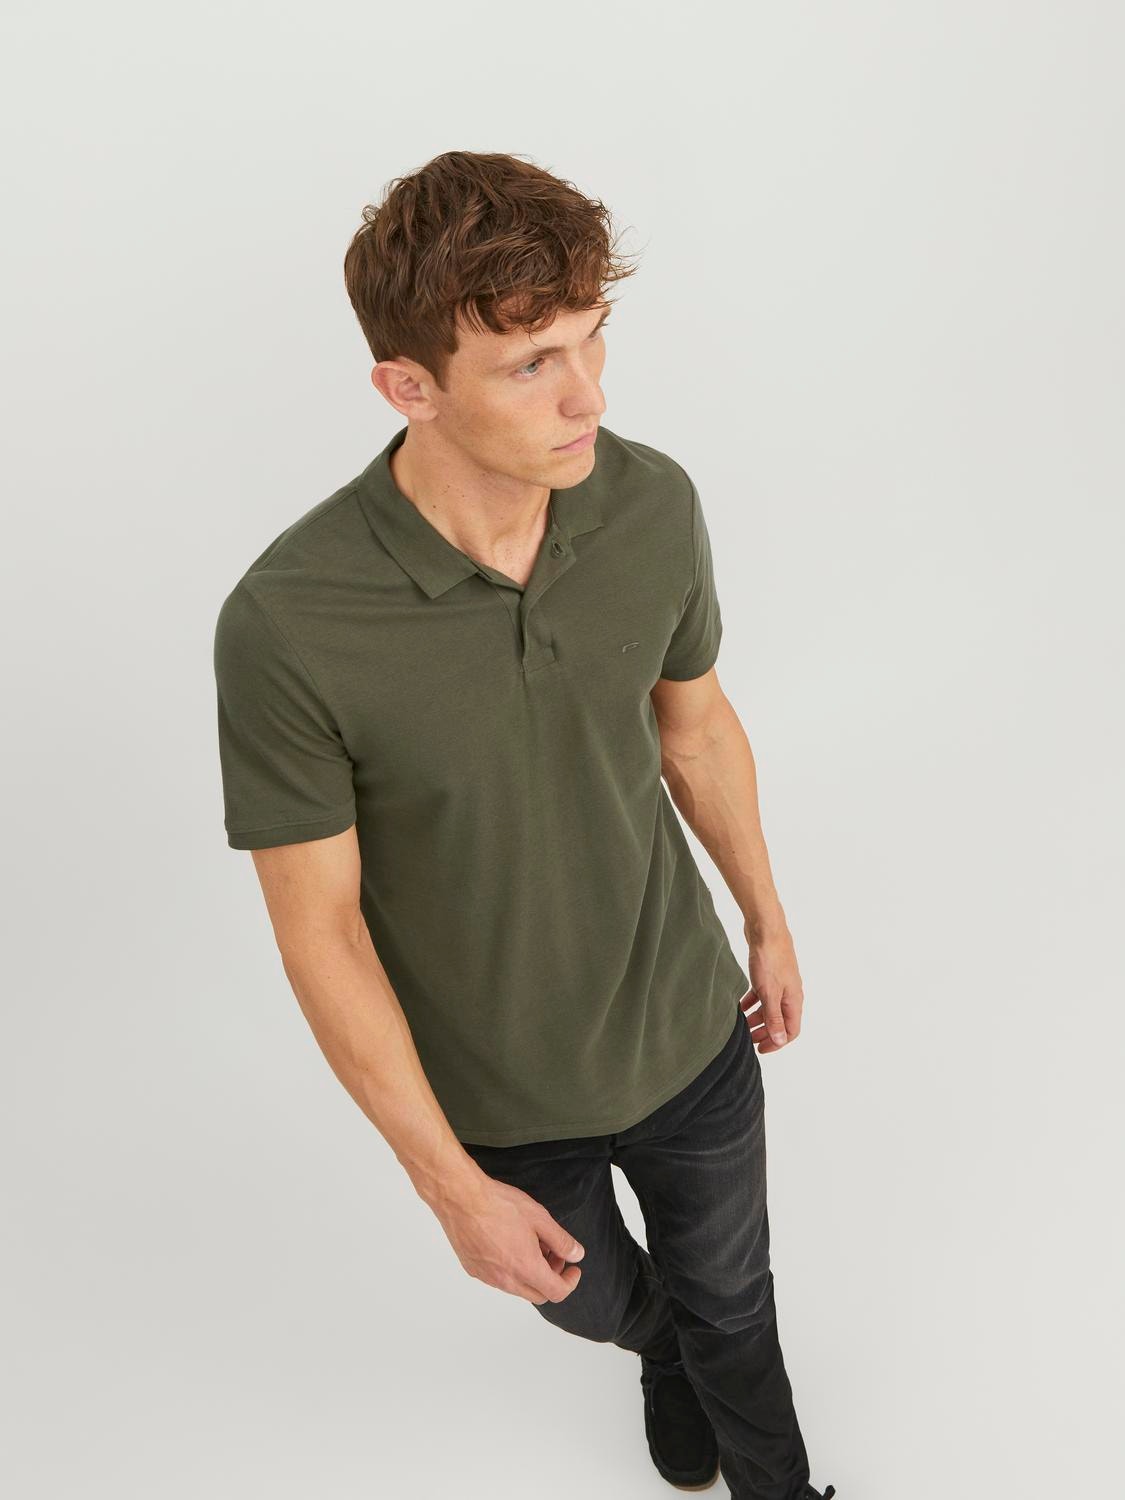 Jack & Jones T-shirt Uni Polo -Olive Night - 12136516